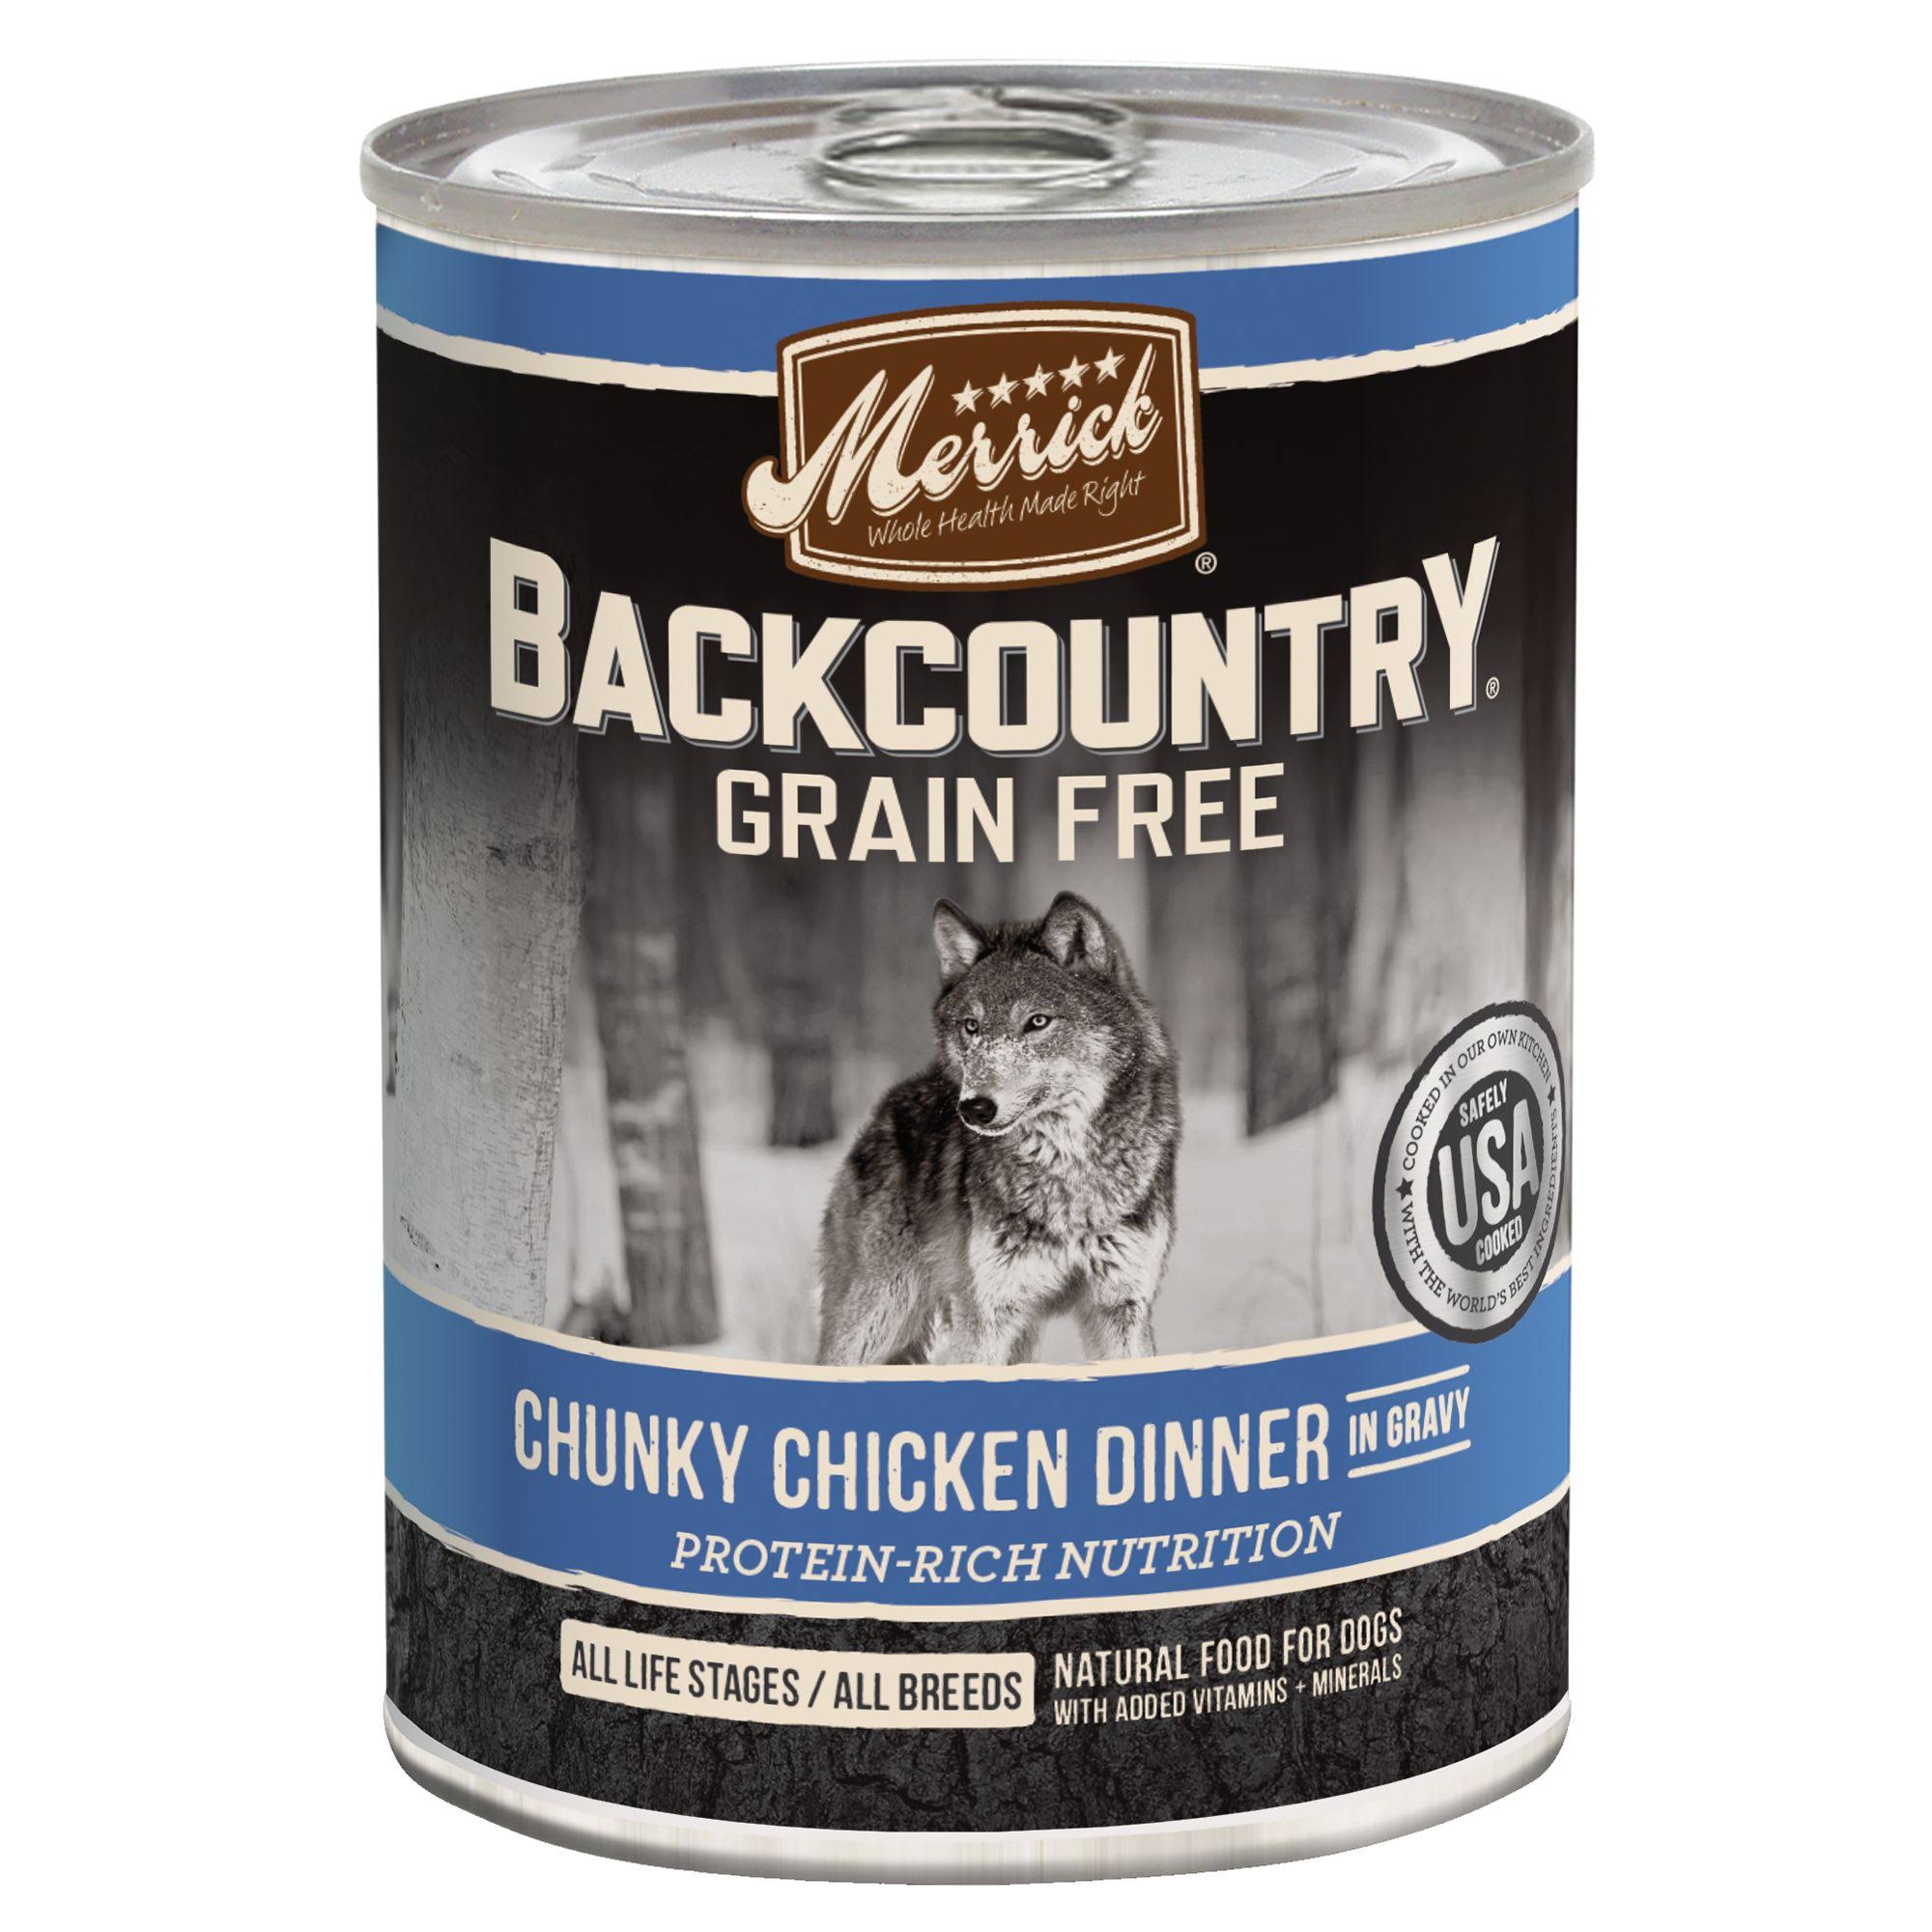 Merrick Backcountry Dog Food - Chunky Chicken Dinner